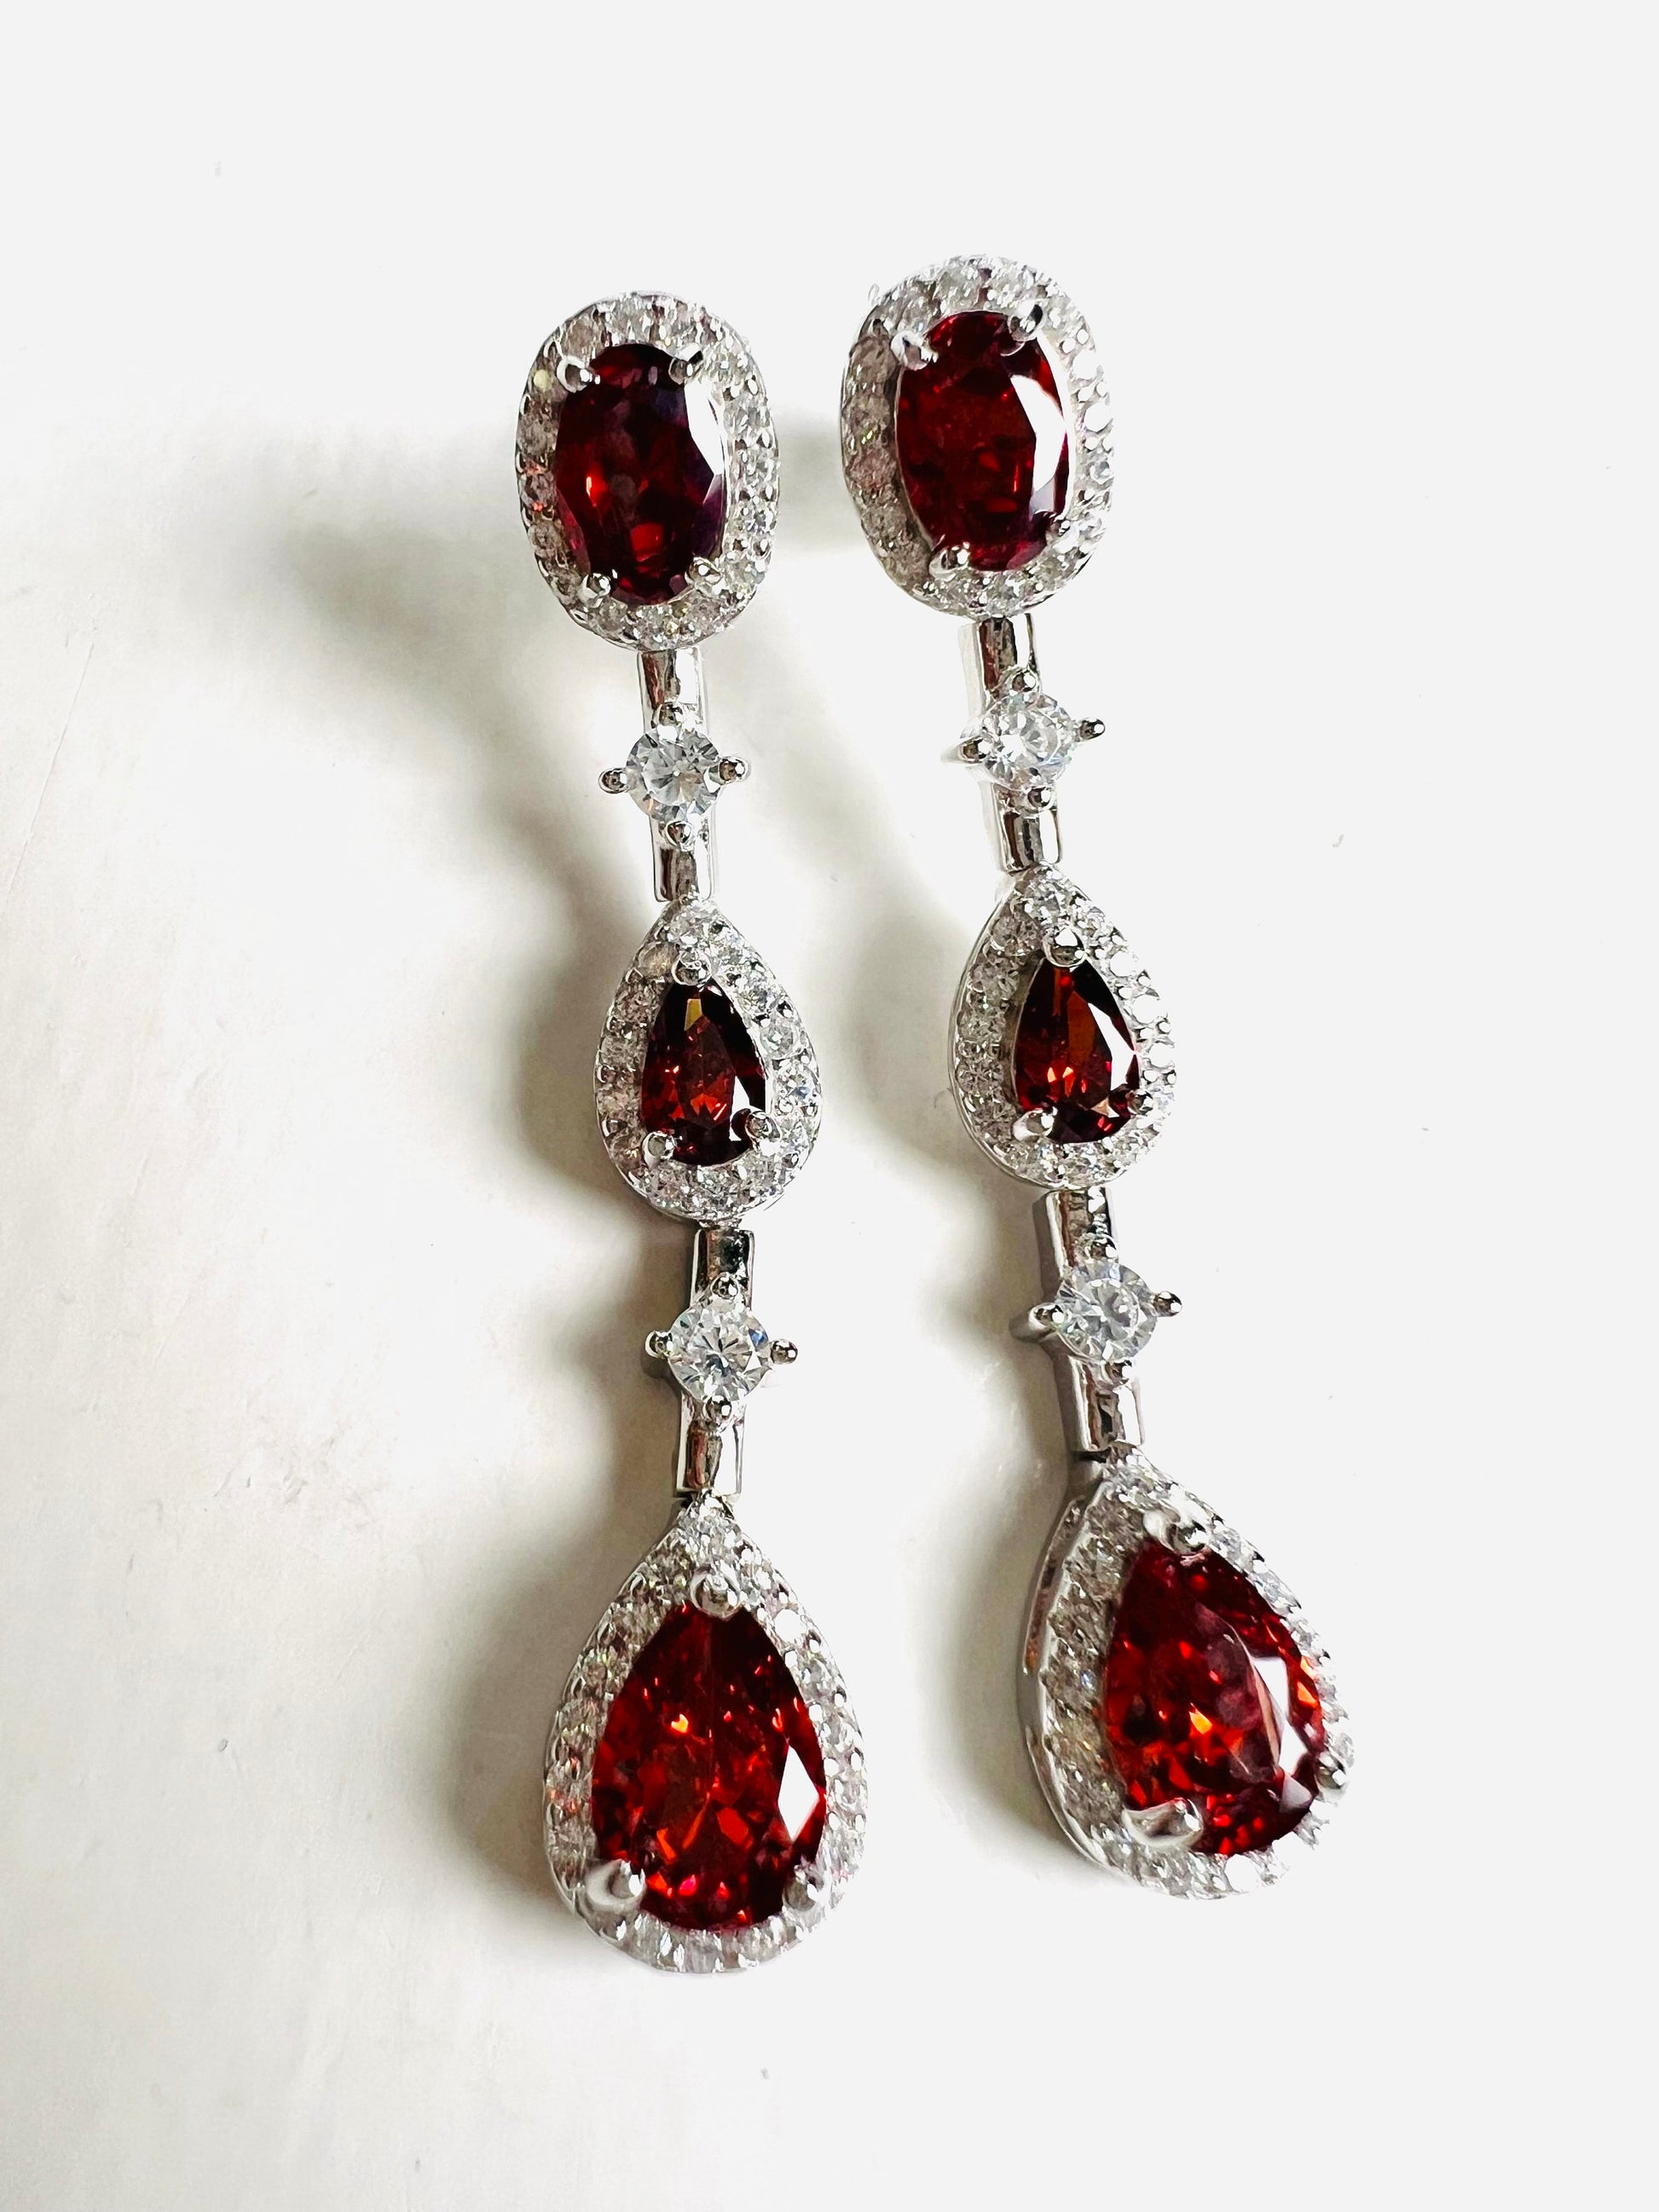 Garnet 925 Sterling Silver earrings. Mozambique Garnet Teadrop 6x40mm dangling on CZ diamond setting Earrings, 925 stamped, gift for her